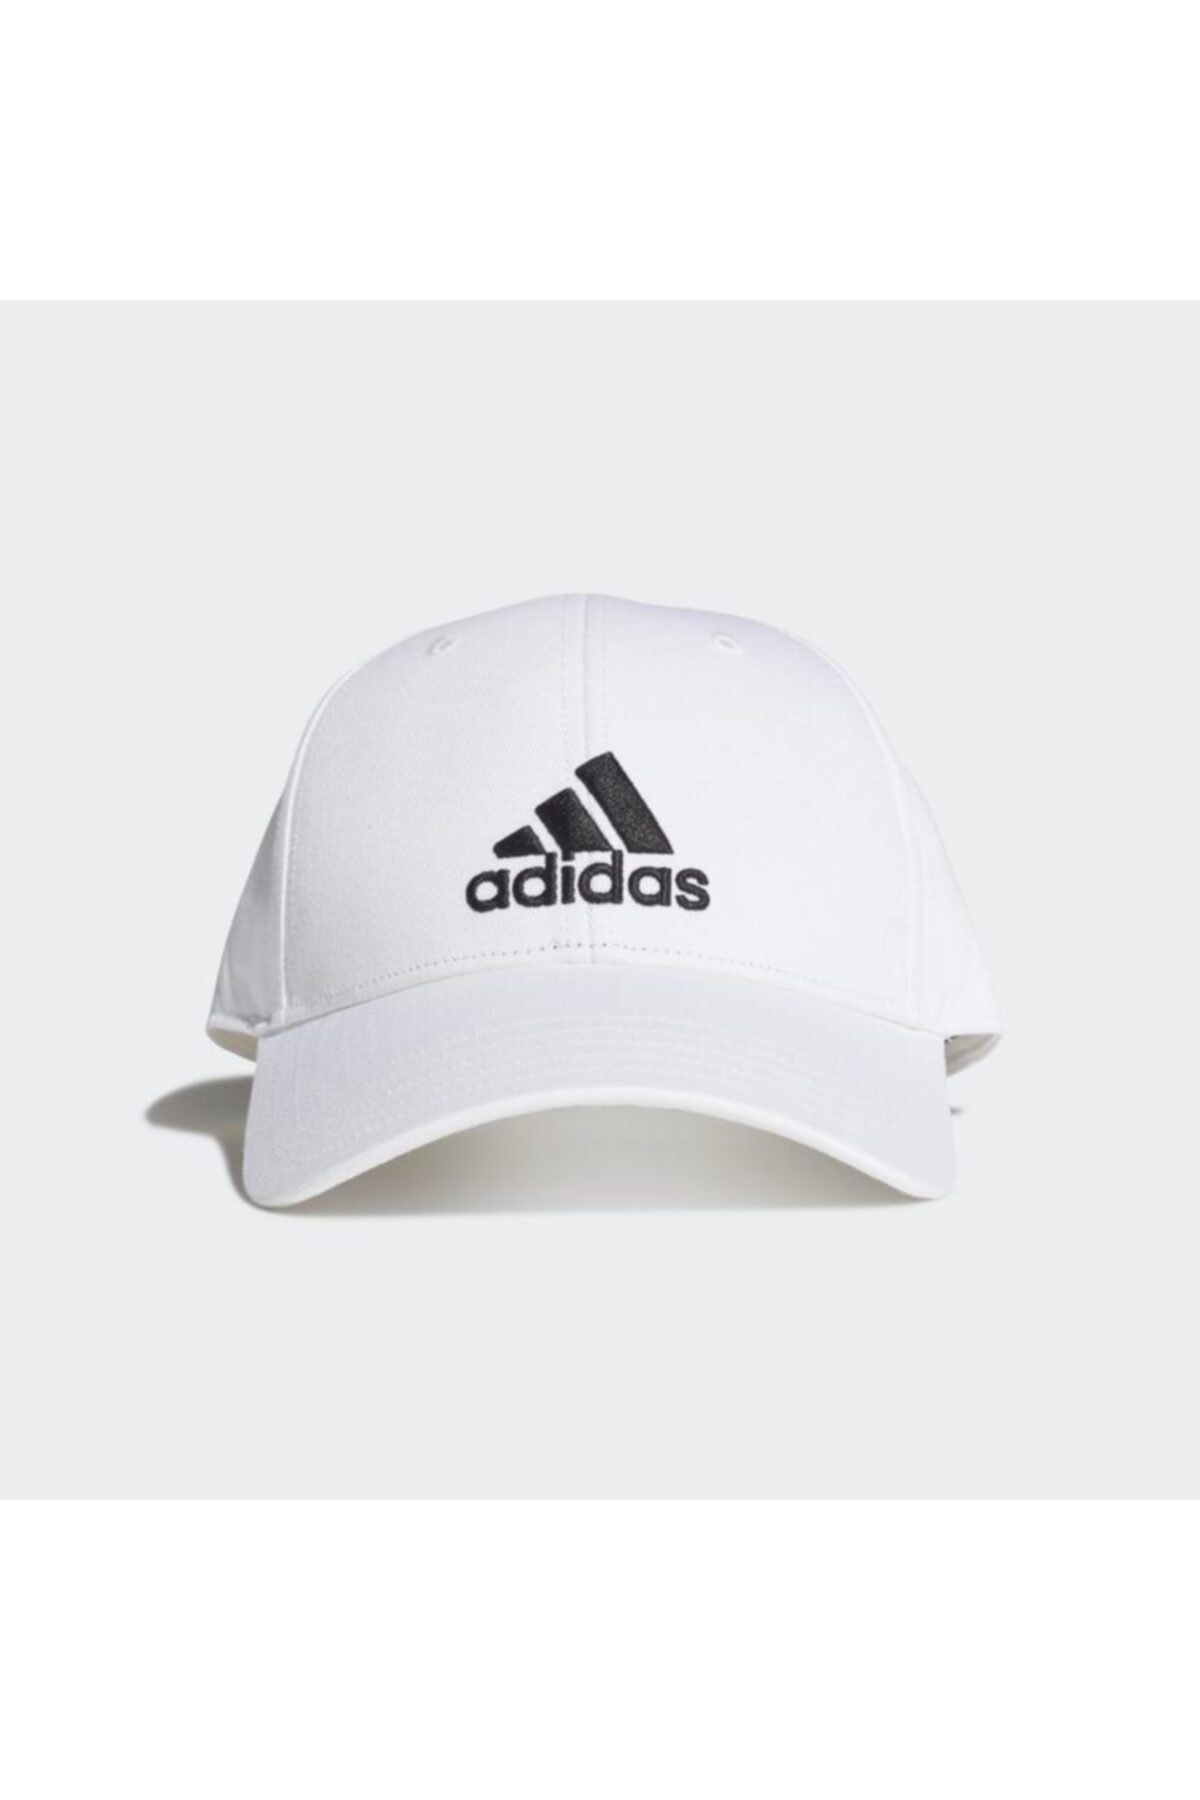 adidas Kadın Beyaz Spor Şapka Fk0890w